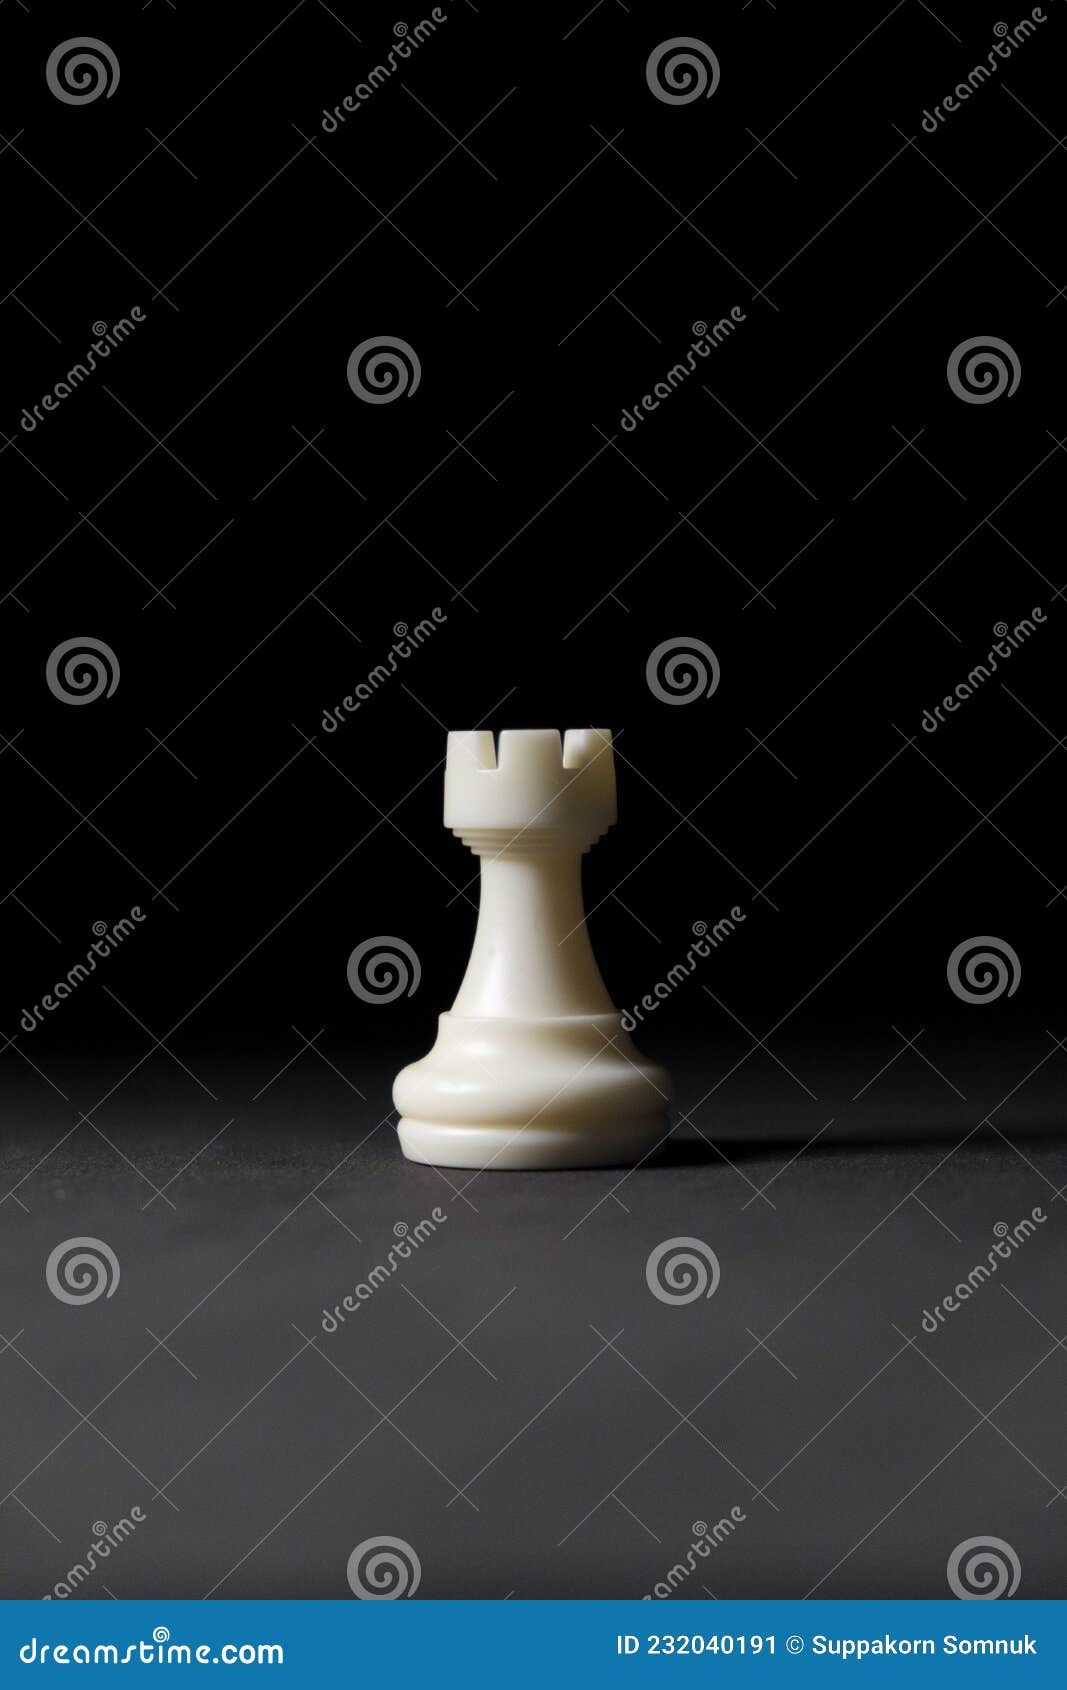 Isolated White Rook Chess Piece on Black Background Stock Image - Image ...